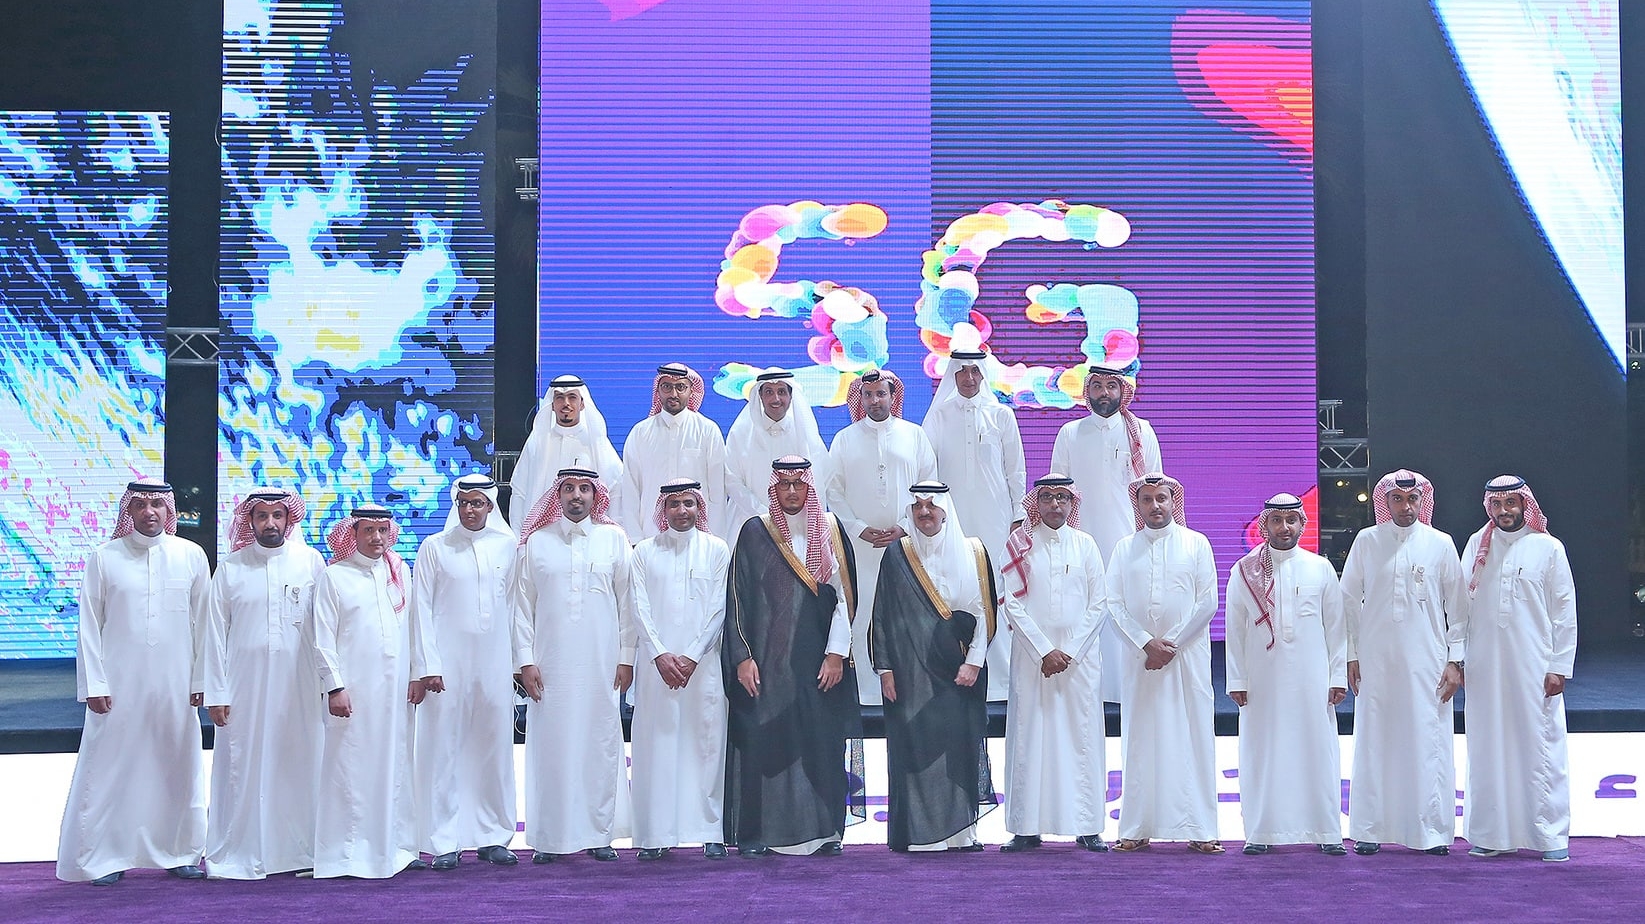 Saudi Arabia advance in deployment of 5G technology ranks 3rd